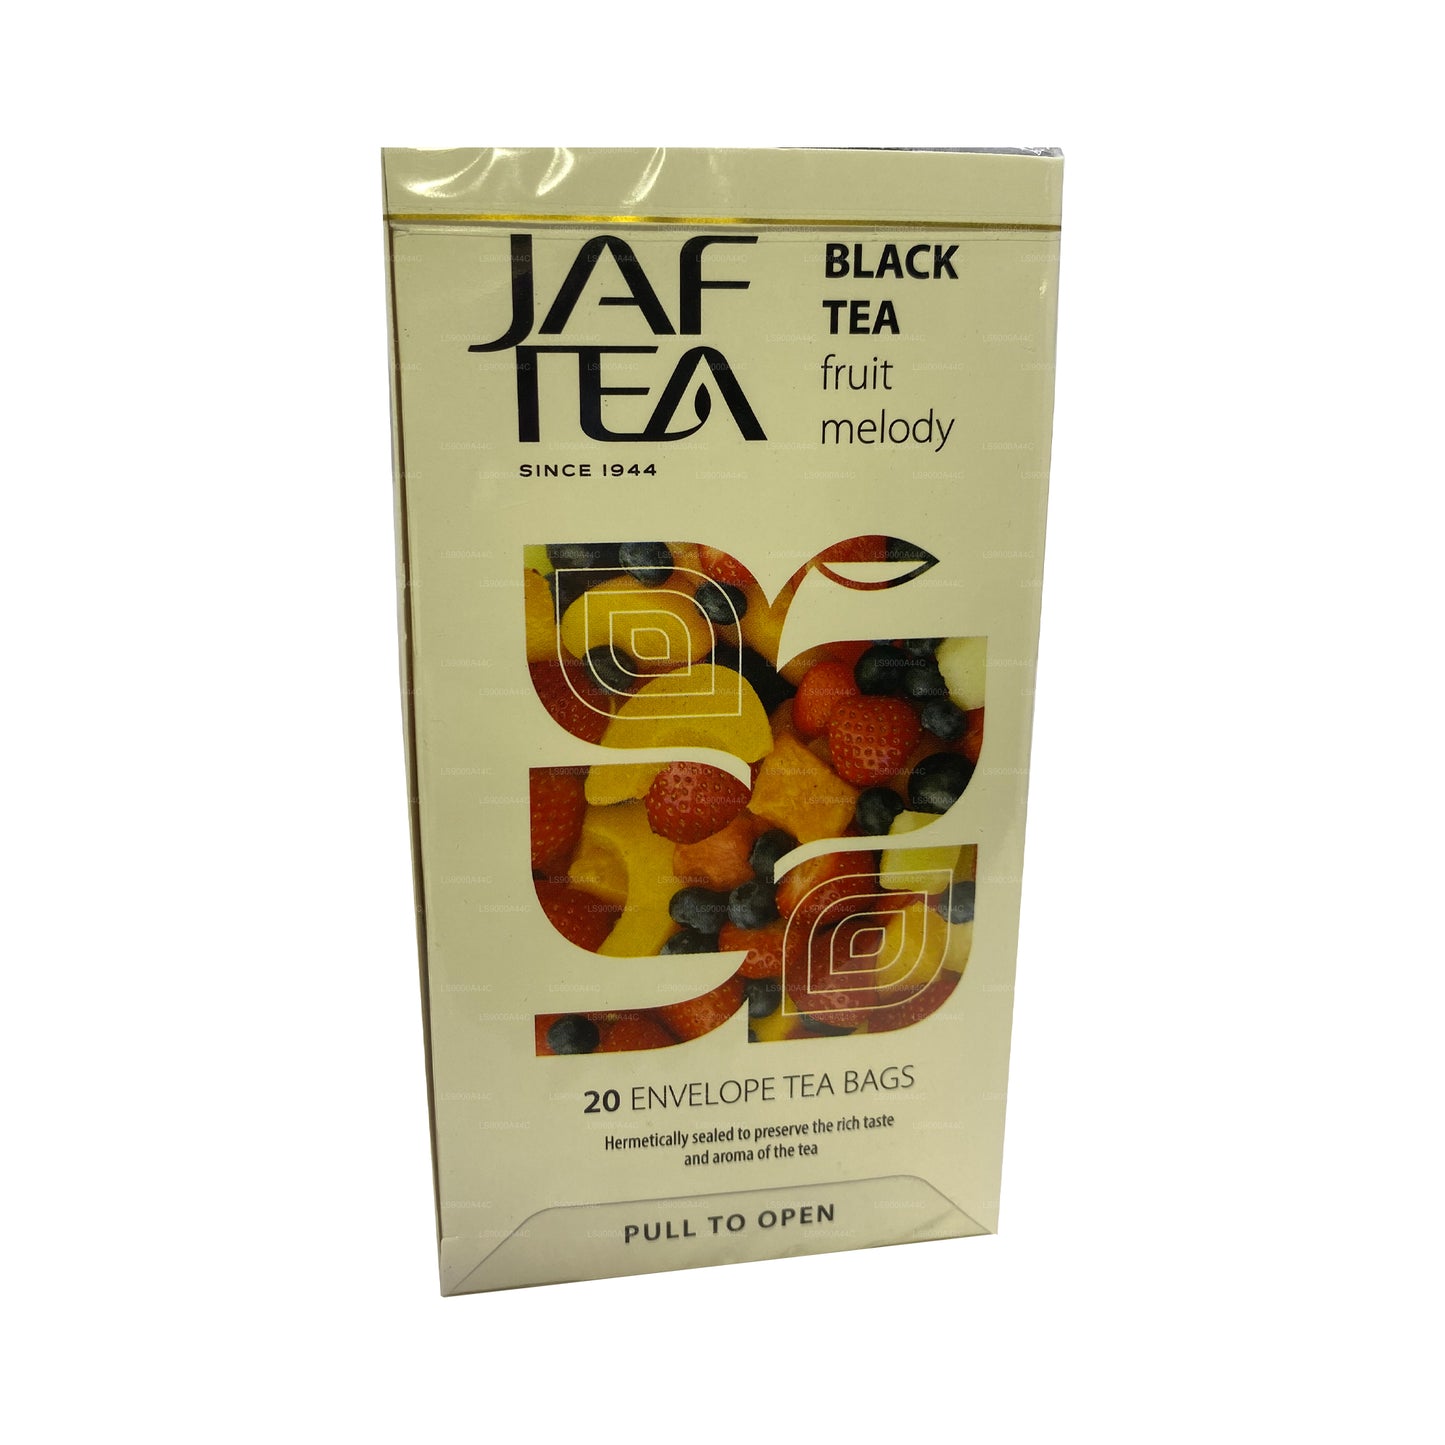 Jaf Tea ピュアフルーツコレクションブラックティーフルーツメロディ (30g) 20ティーバッグ